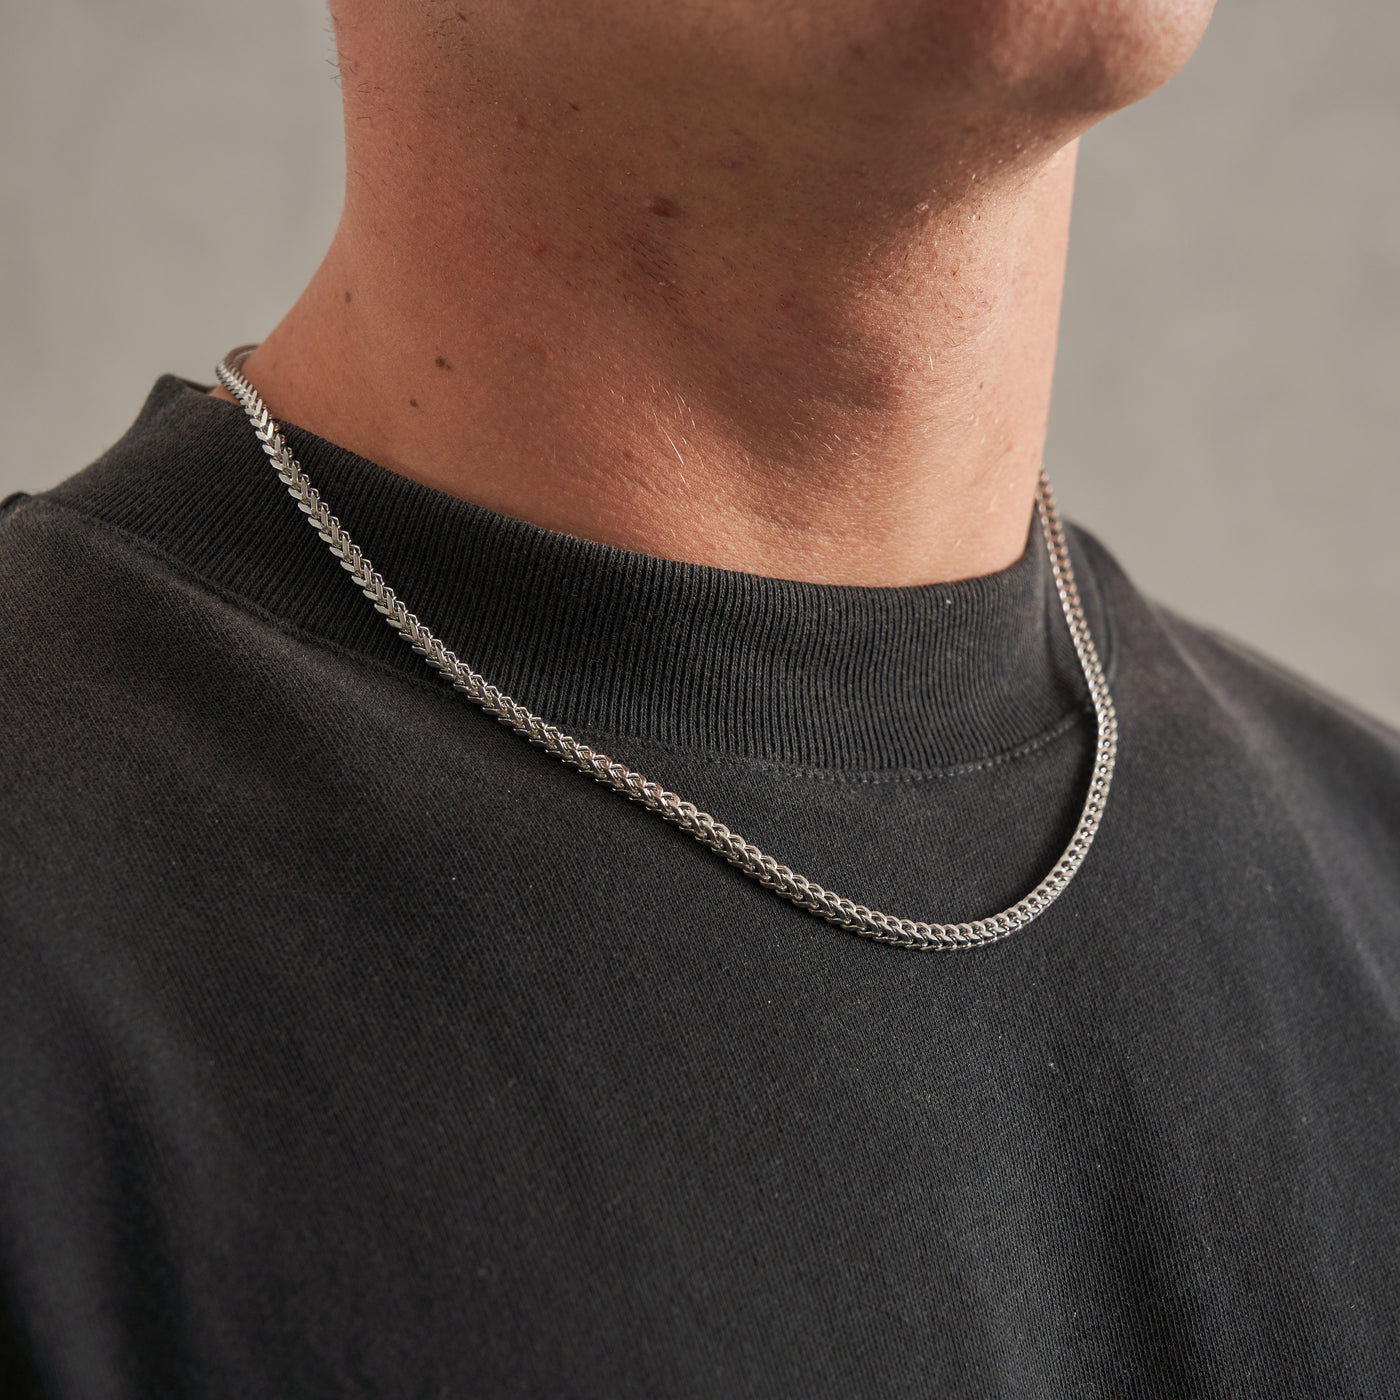 2mm silver Square Franco neck chain for men online in Pakistan